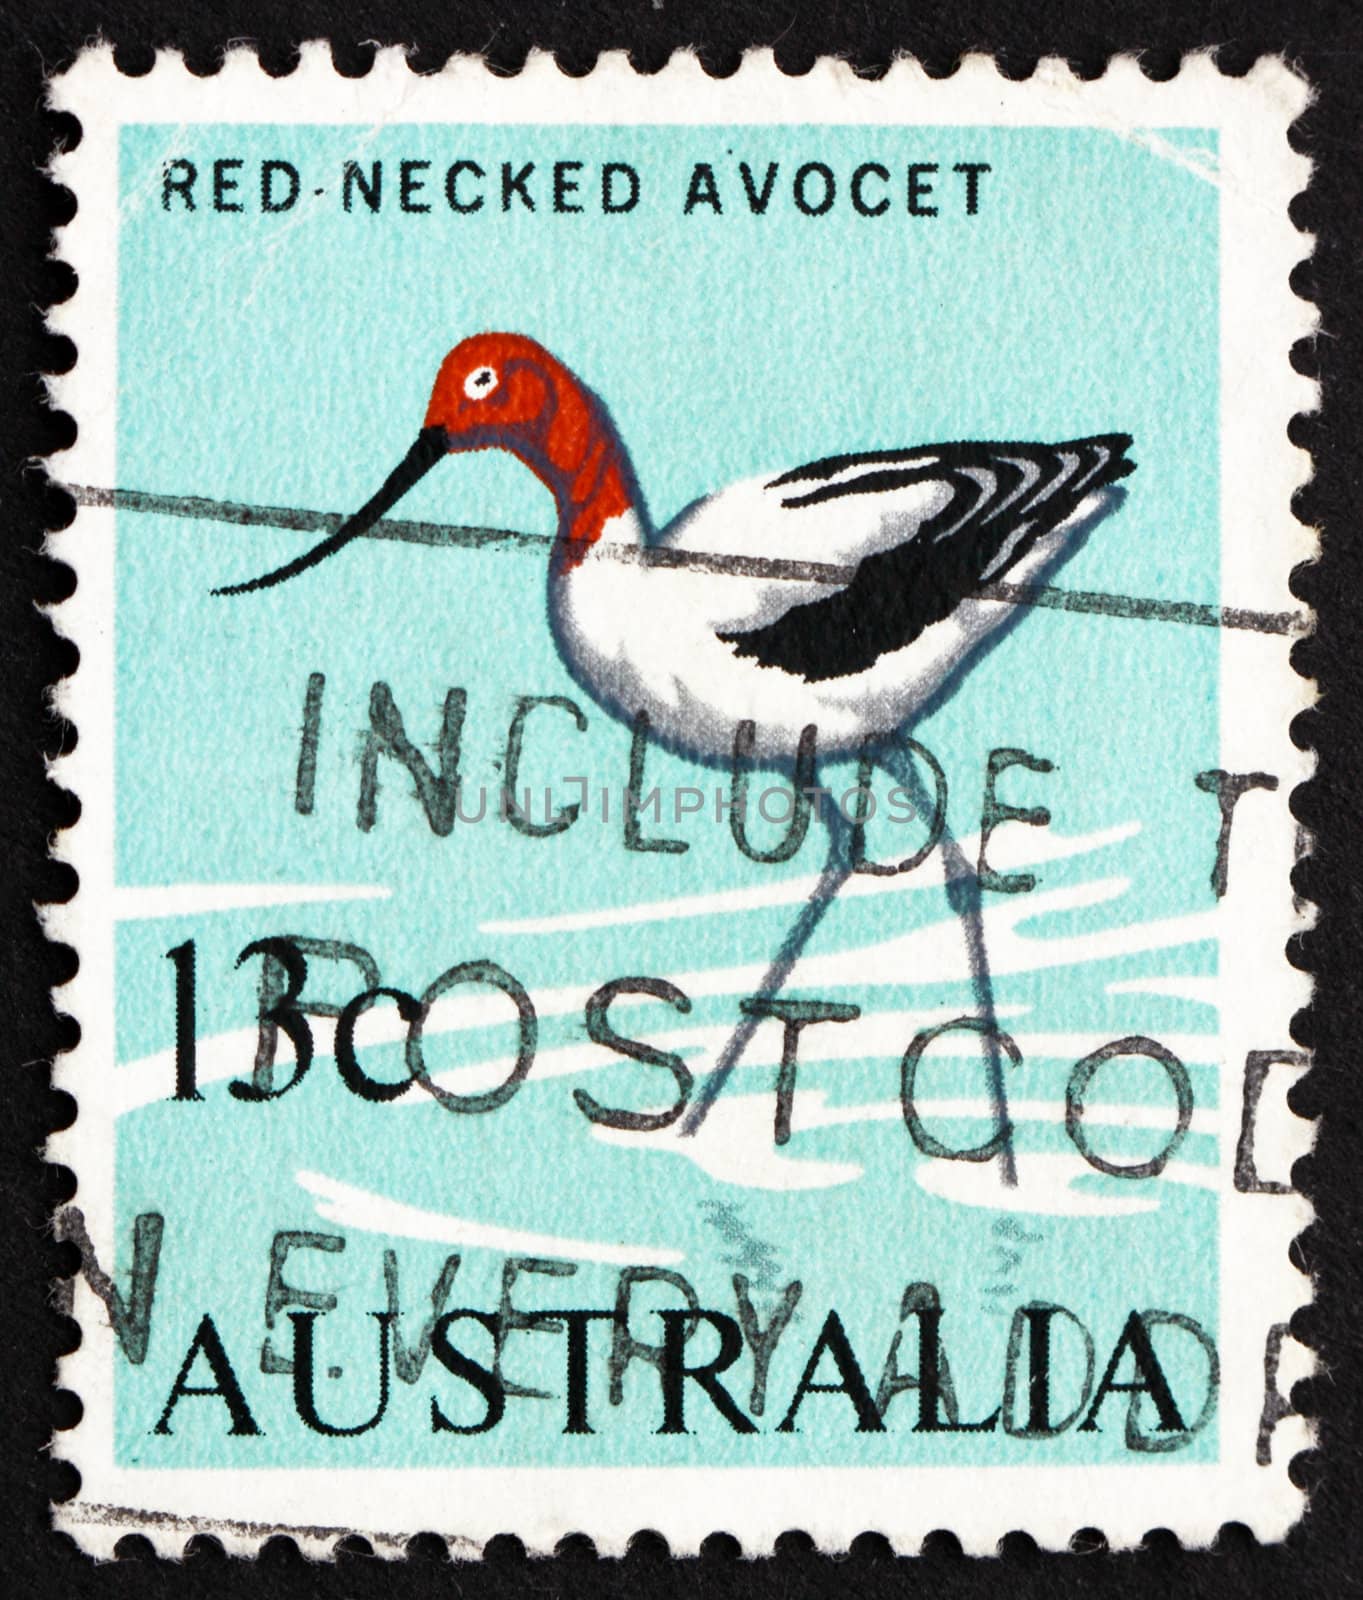 AUSTRALIA - CIRCA 1966: a stamp printed in the Australia shows Red-necked Avocet, Recurvirostra Novaehollandiae, Bird, circa 1966